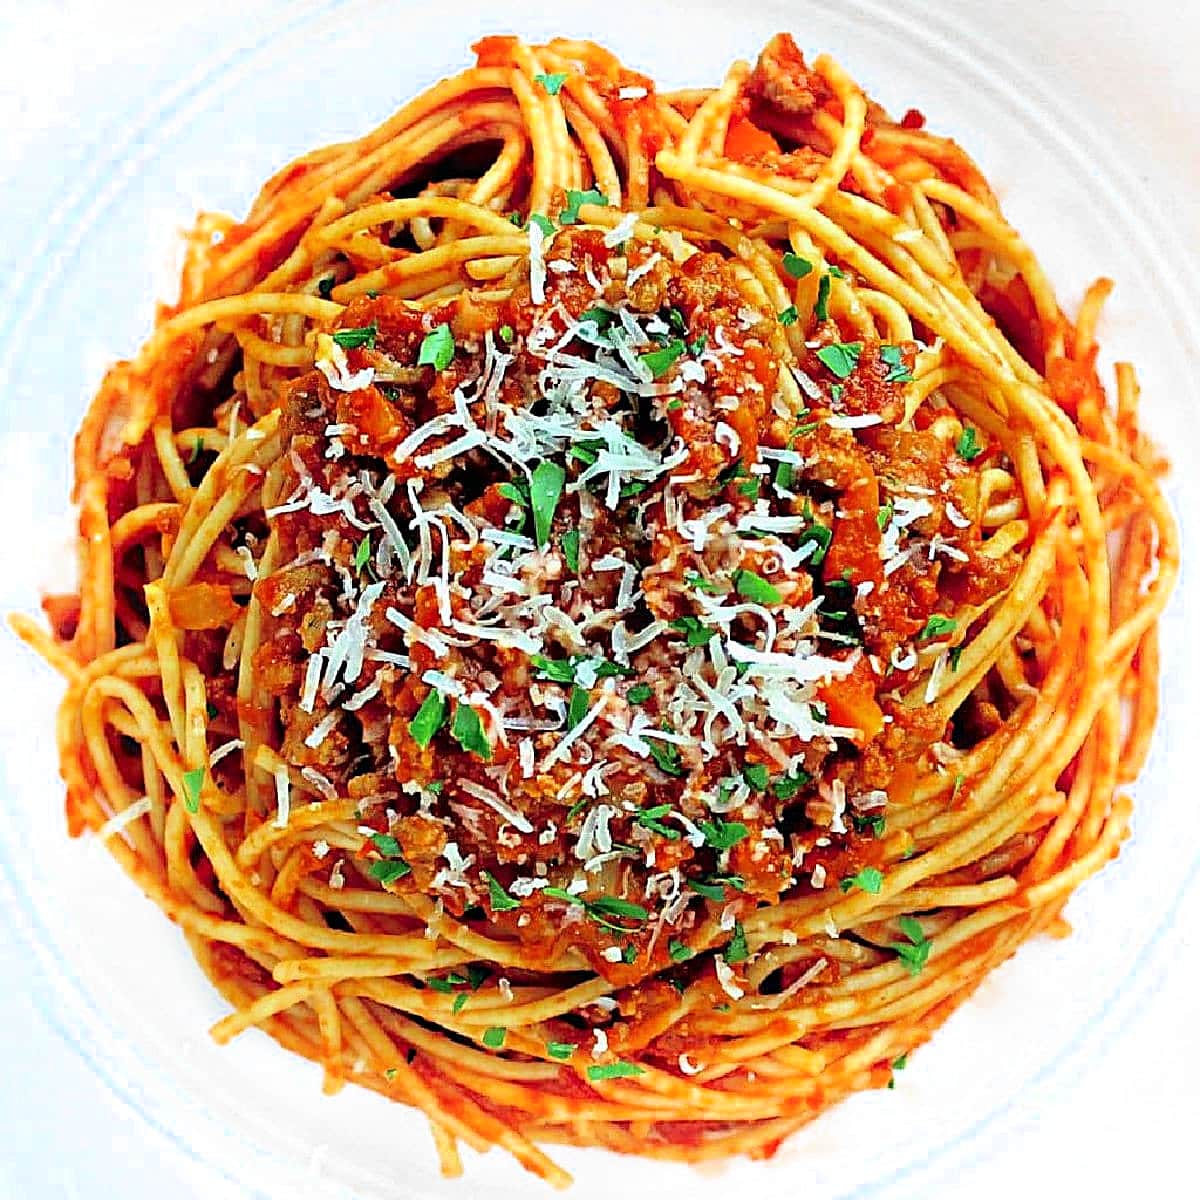 spaghetti bolognese in a white bowl.